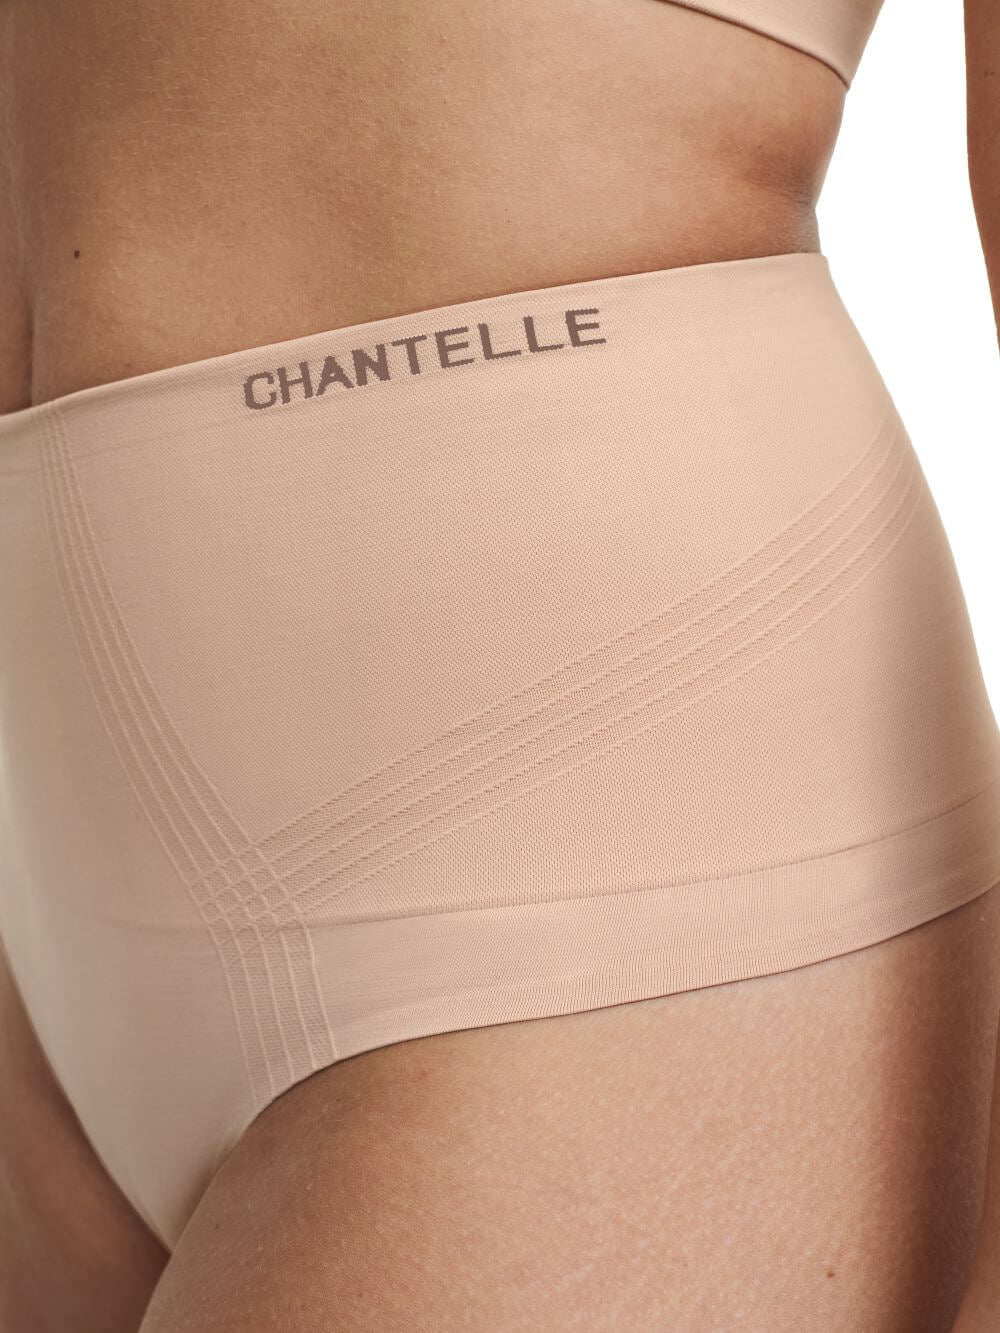 Chantelle - Smooth Comfort Skin.